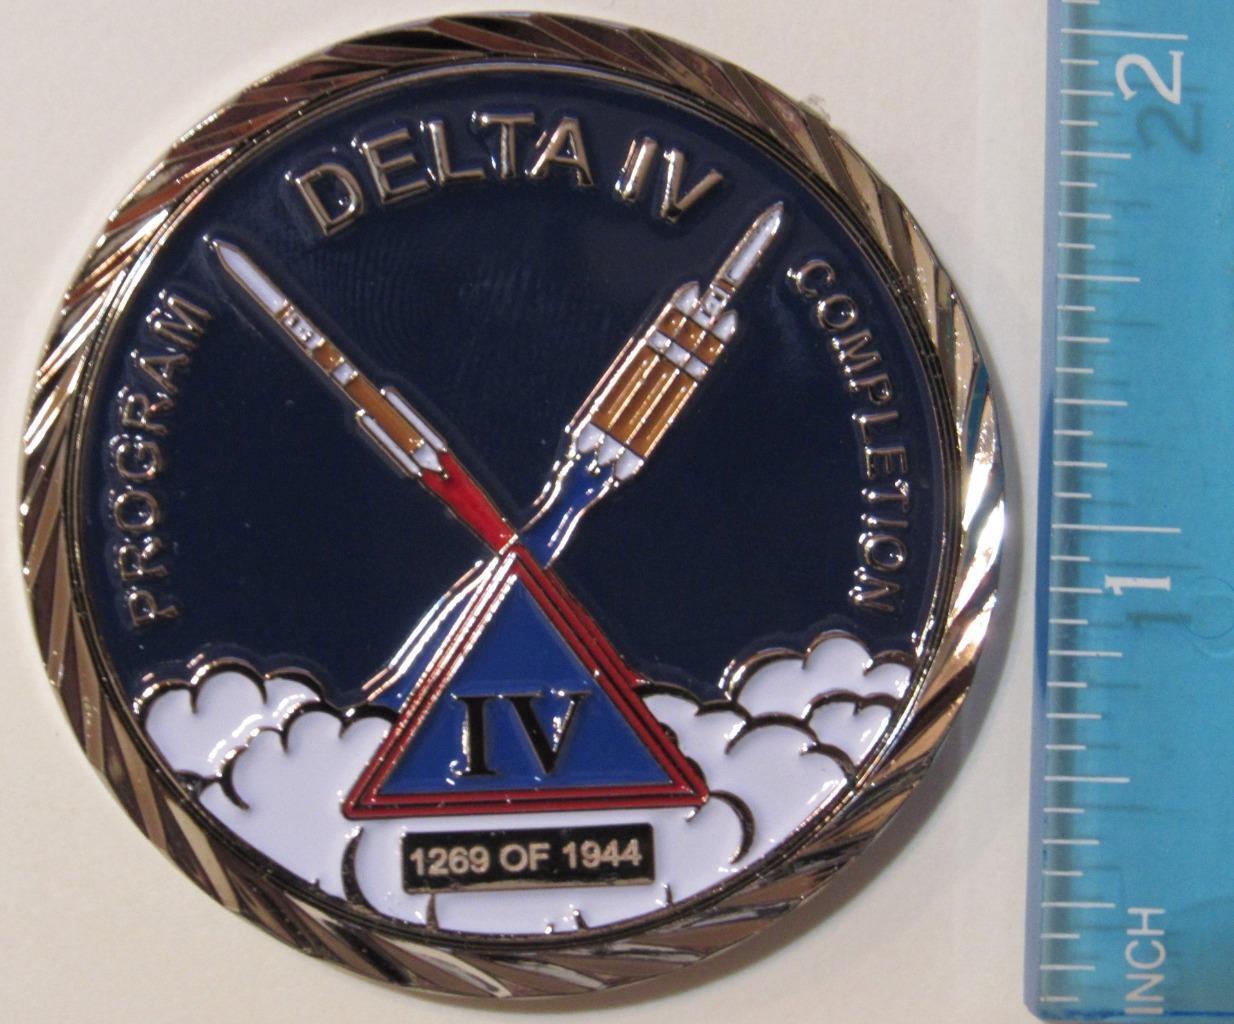 DELTA IV PROGRAM COMPLETION COMMEMORATIVE COIN SERIALIZED USAF USSF BOEING ULA